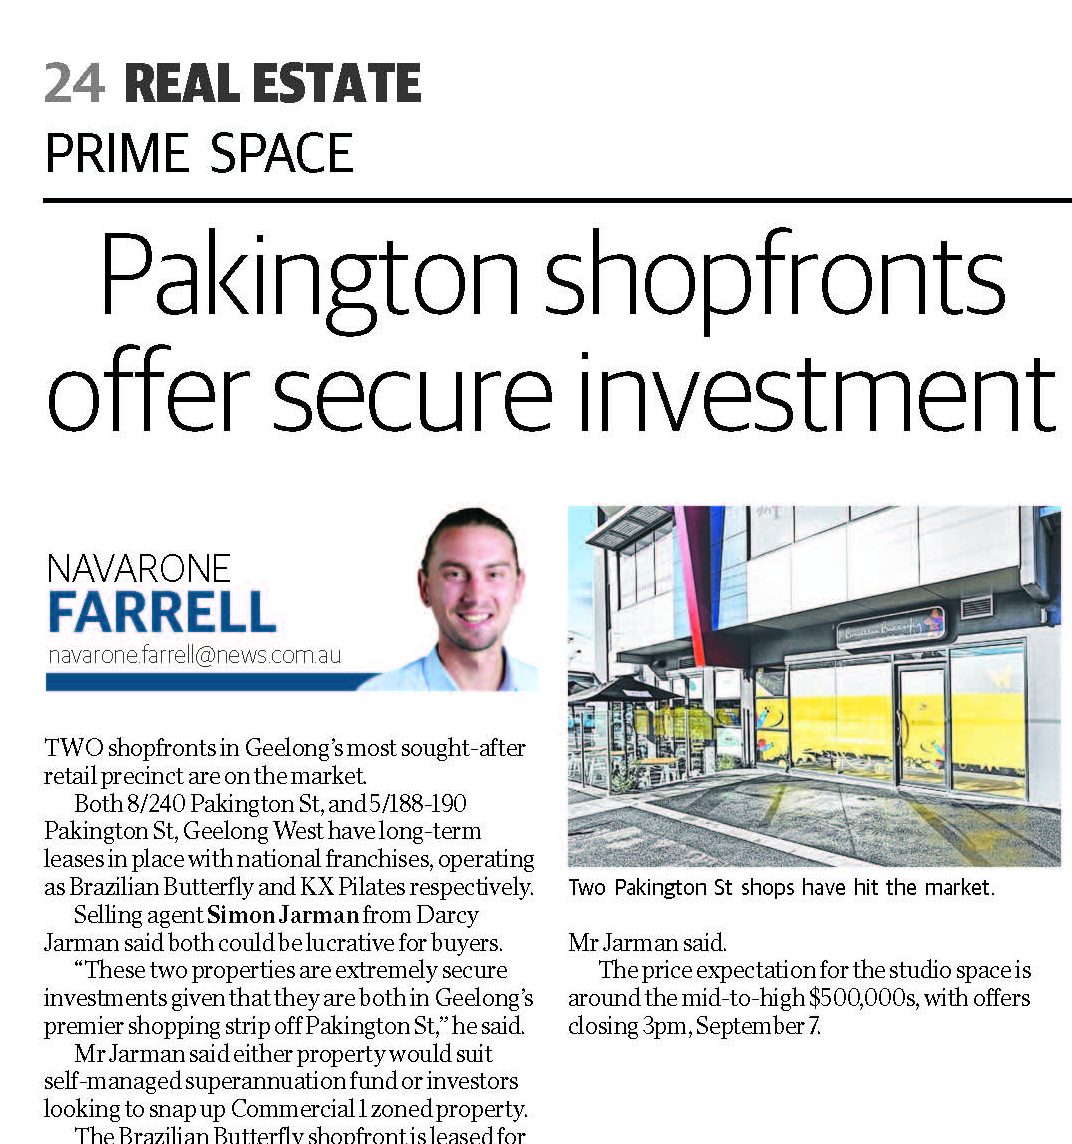 Pakington shopfronts offer secure investment